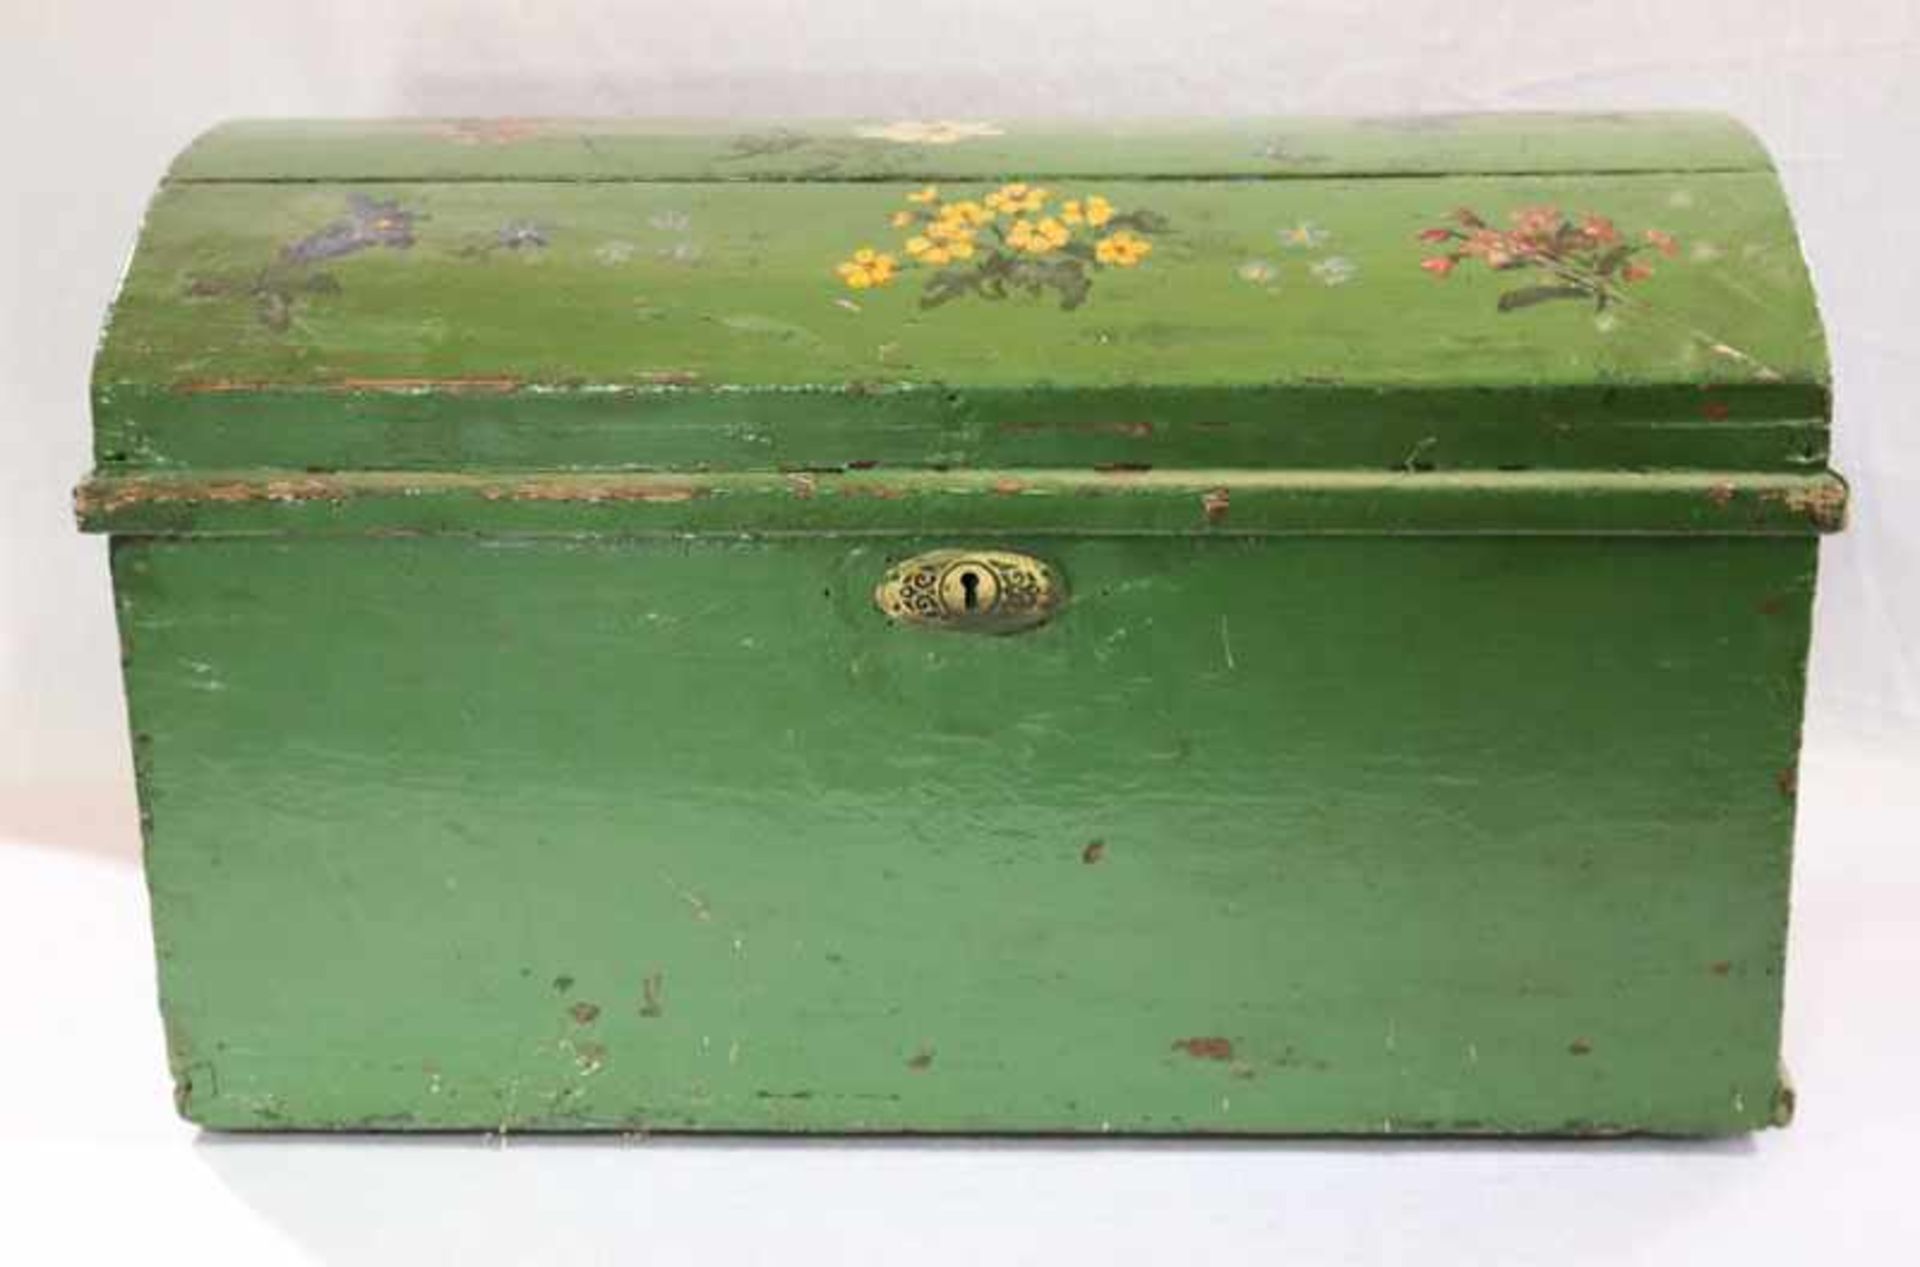 Holztruhe, Nadelholz, Korpus mit gewölbtem Deckel, aufklappbar, grün bemalt mit Alpenblumen, H 43